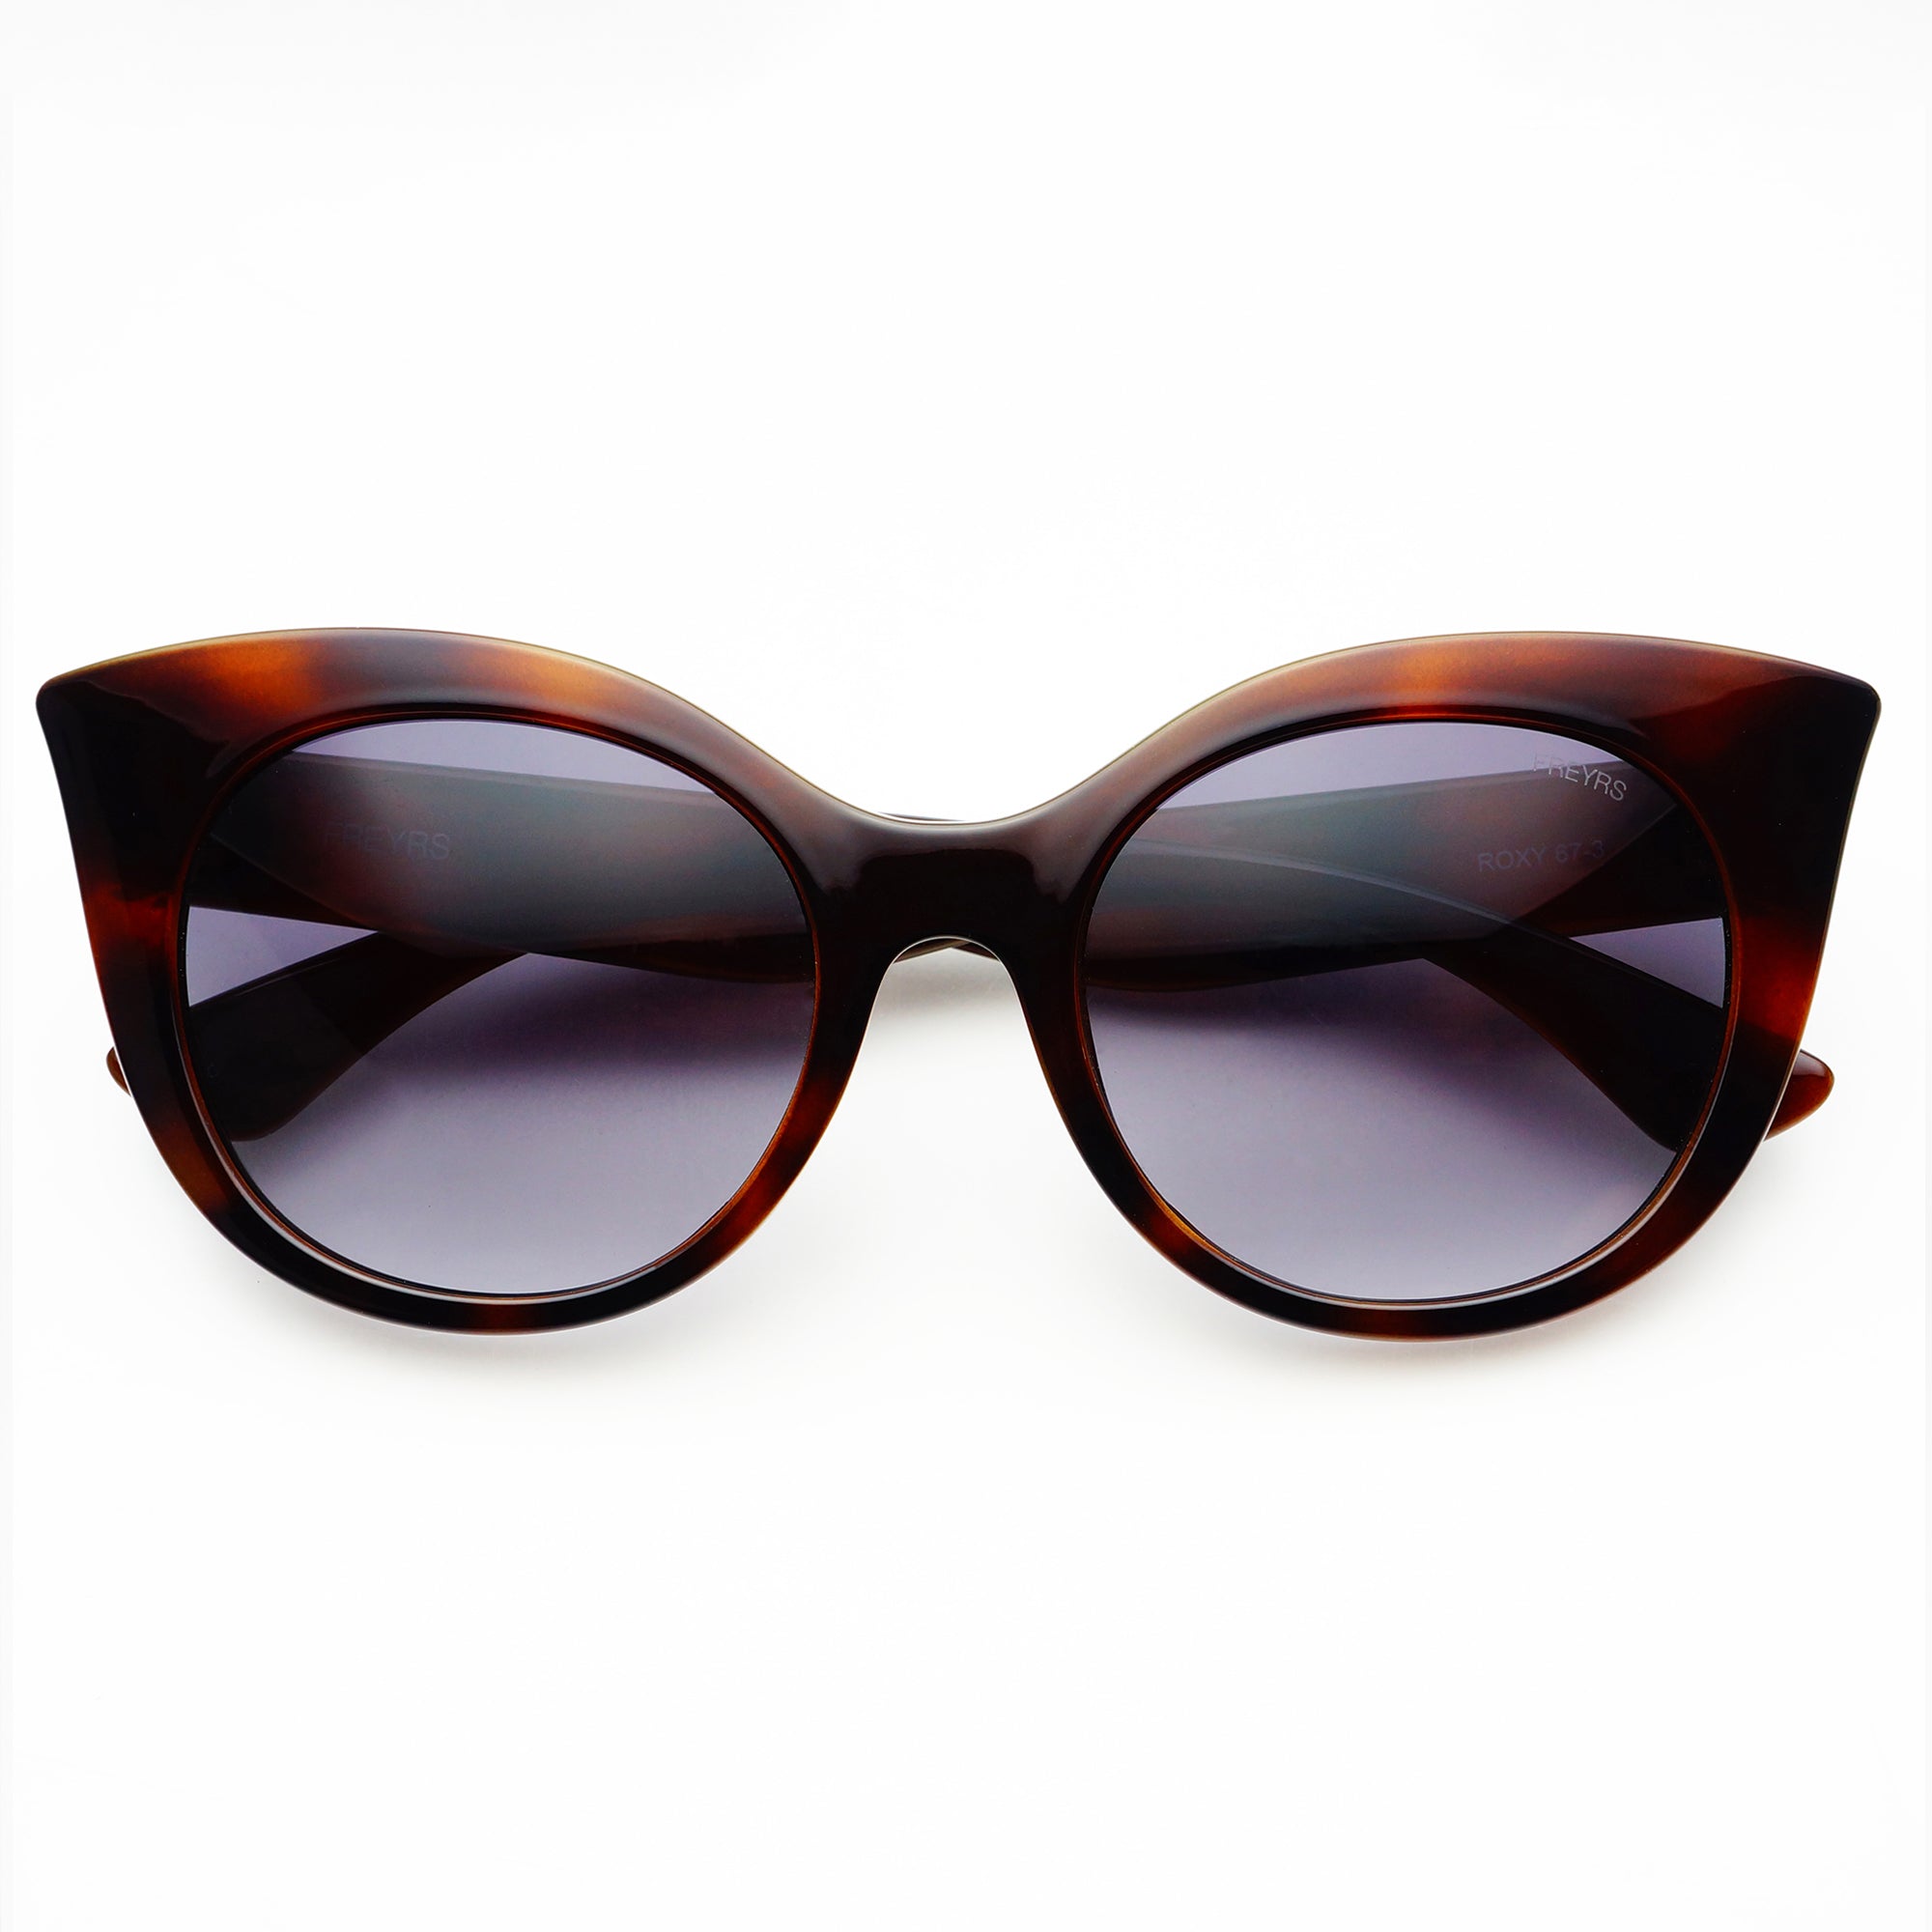 Roxy Womens Large Round Cat Eye Sunglasses by FREYRS Eyewear